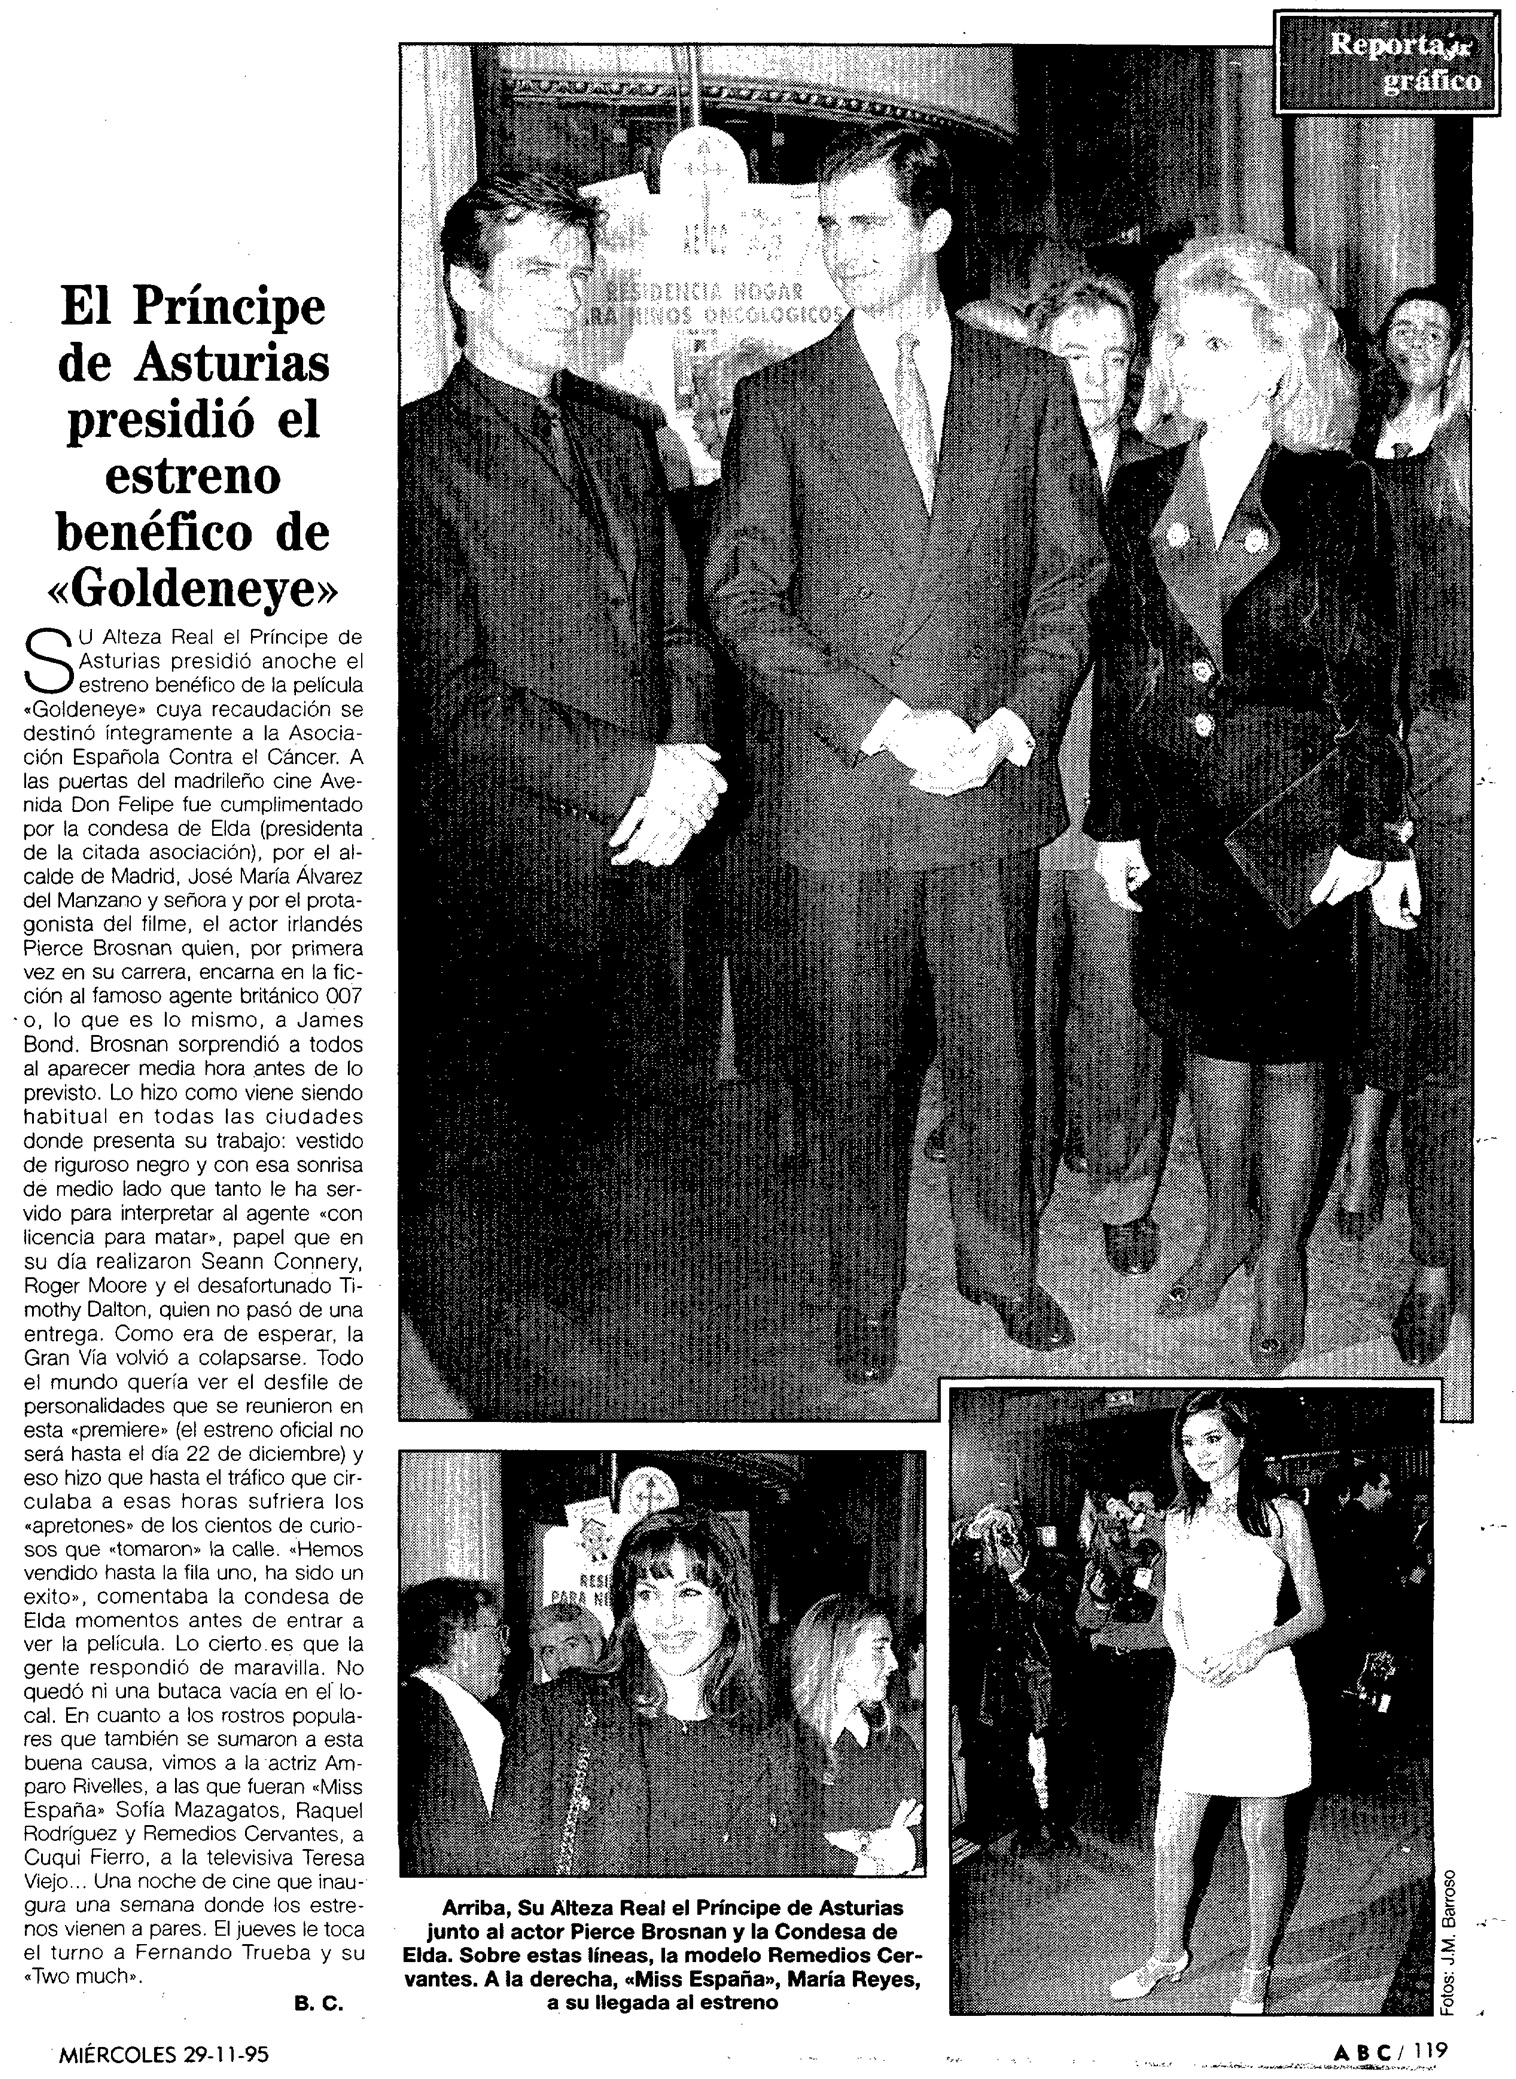 17 1995 11 29 ABC Madrid 119 Estreno benefico